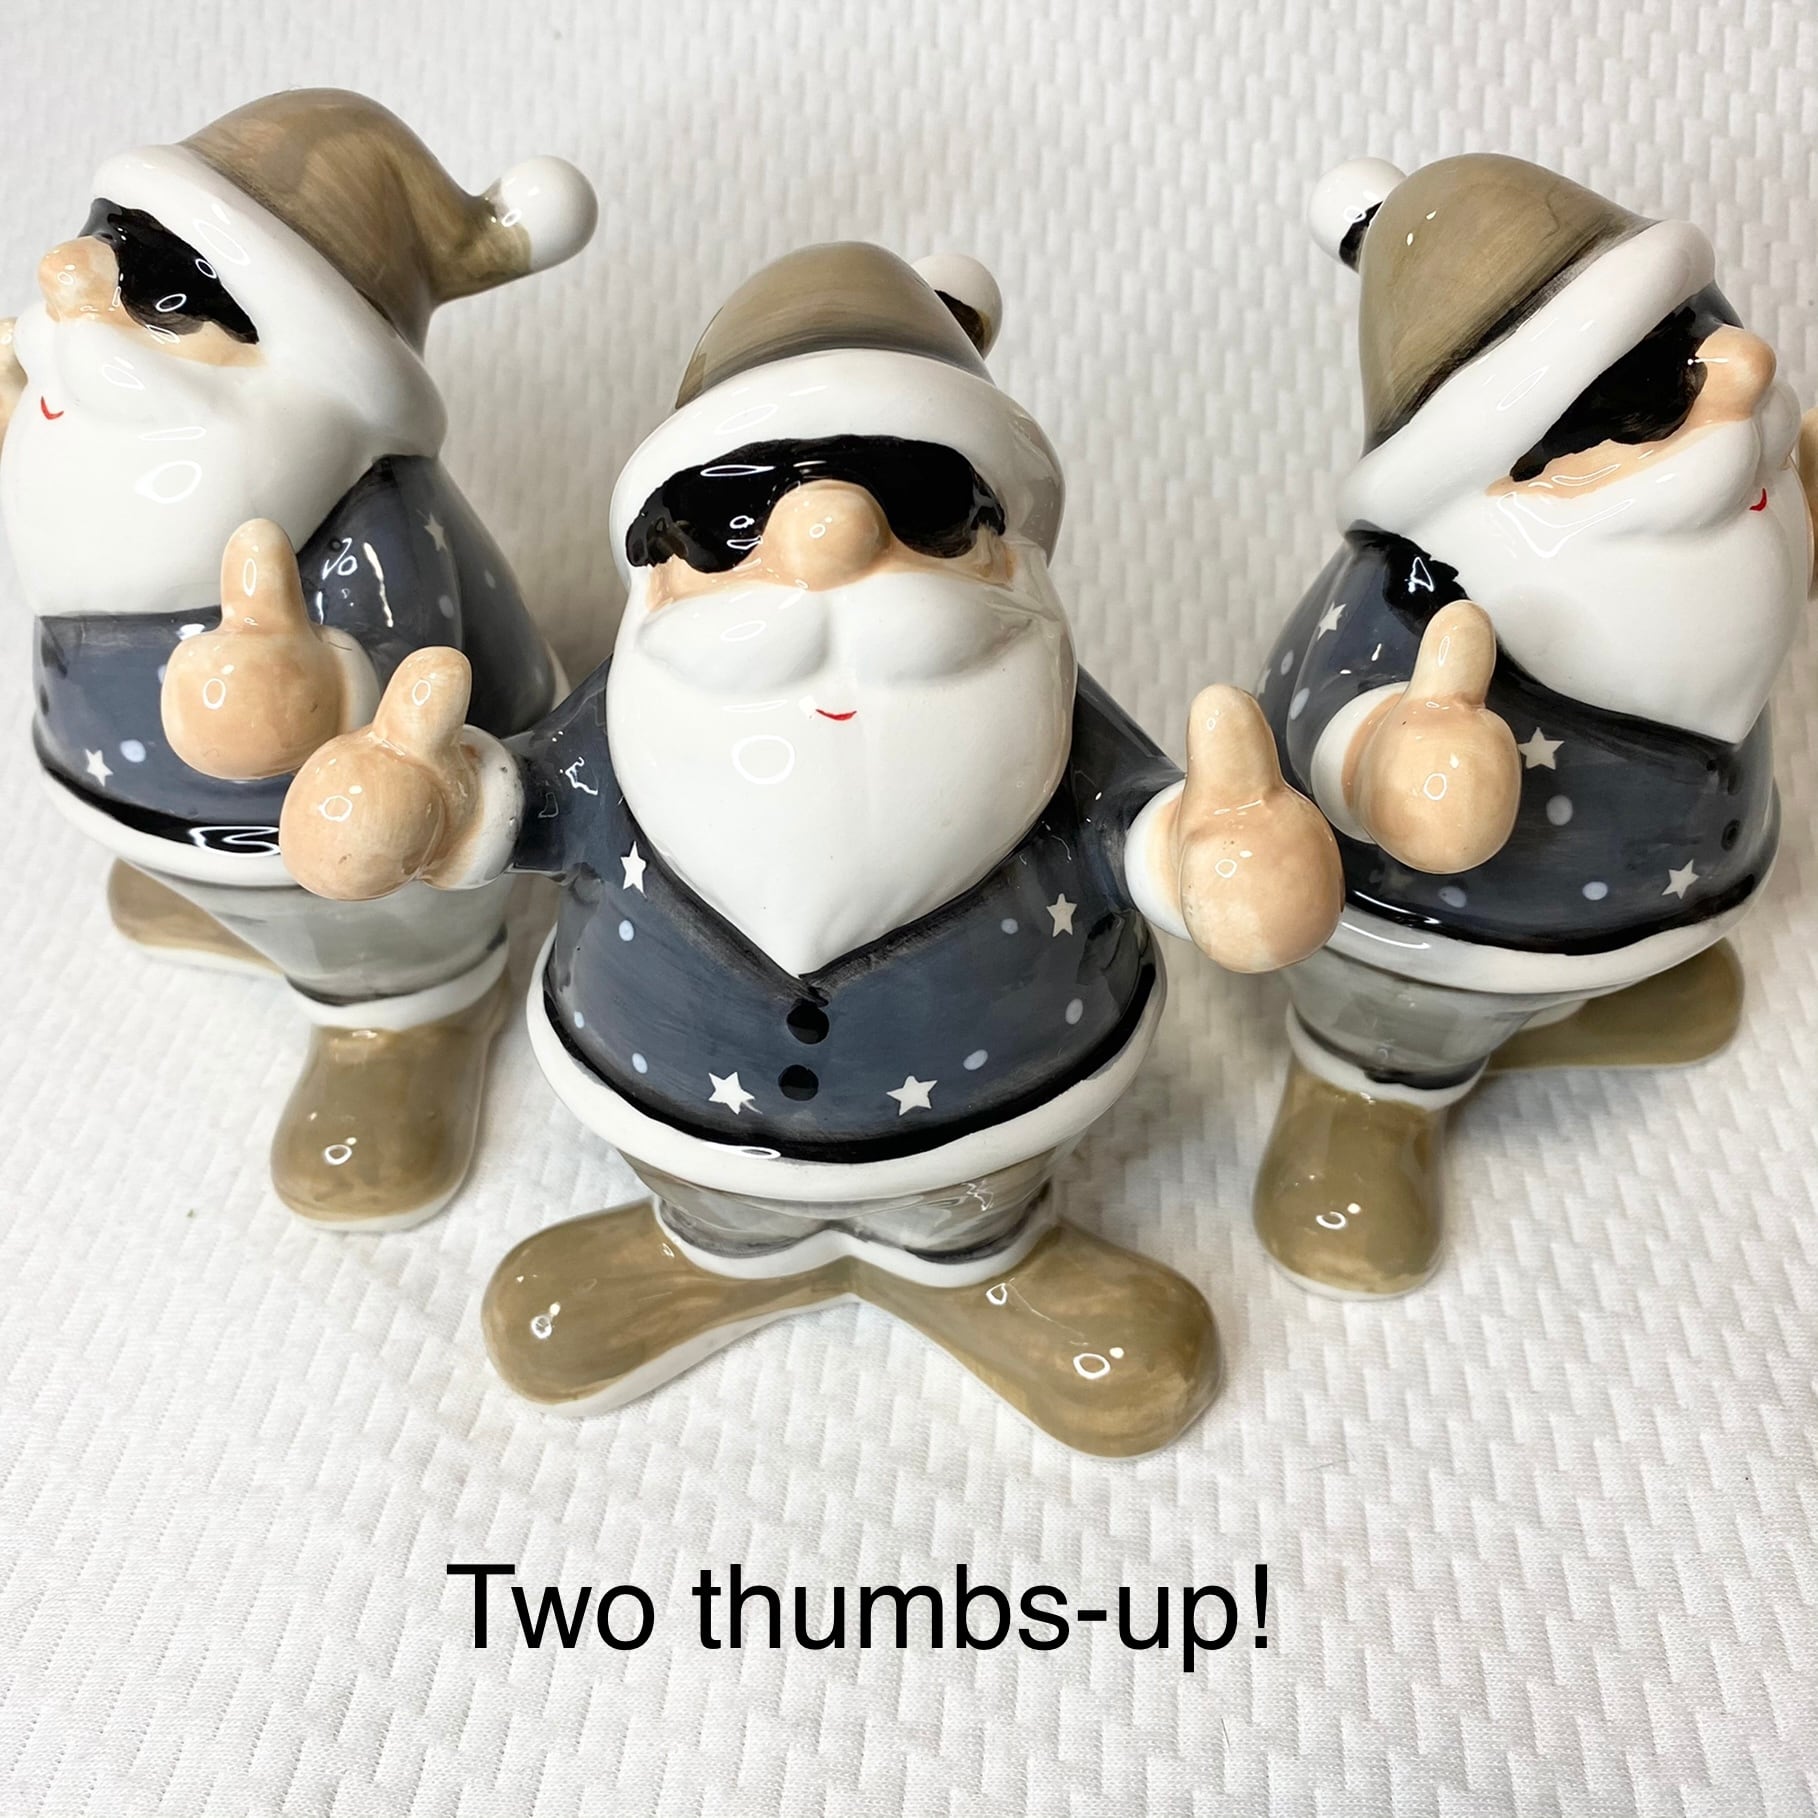 Thumbs up! 陶器　サンタクロース　クリスマス雑貨　イイネサンタ　サングラス　Xmasインテリア